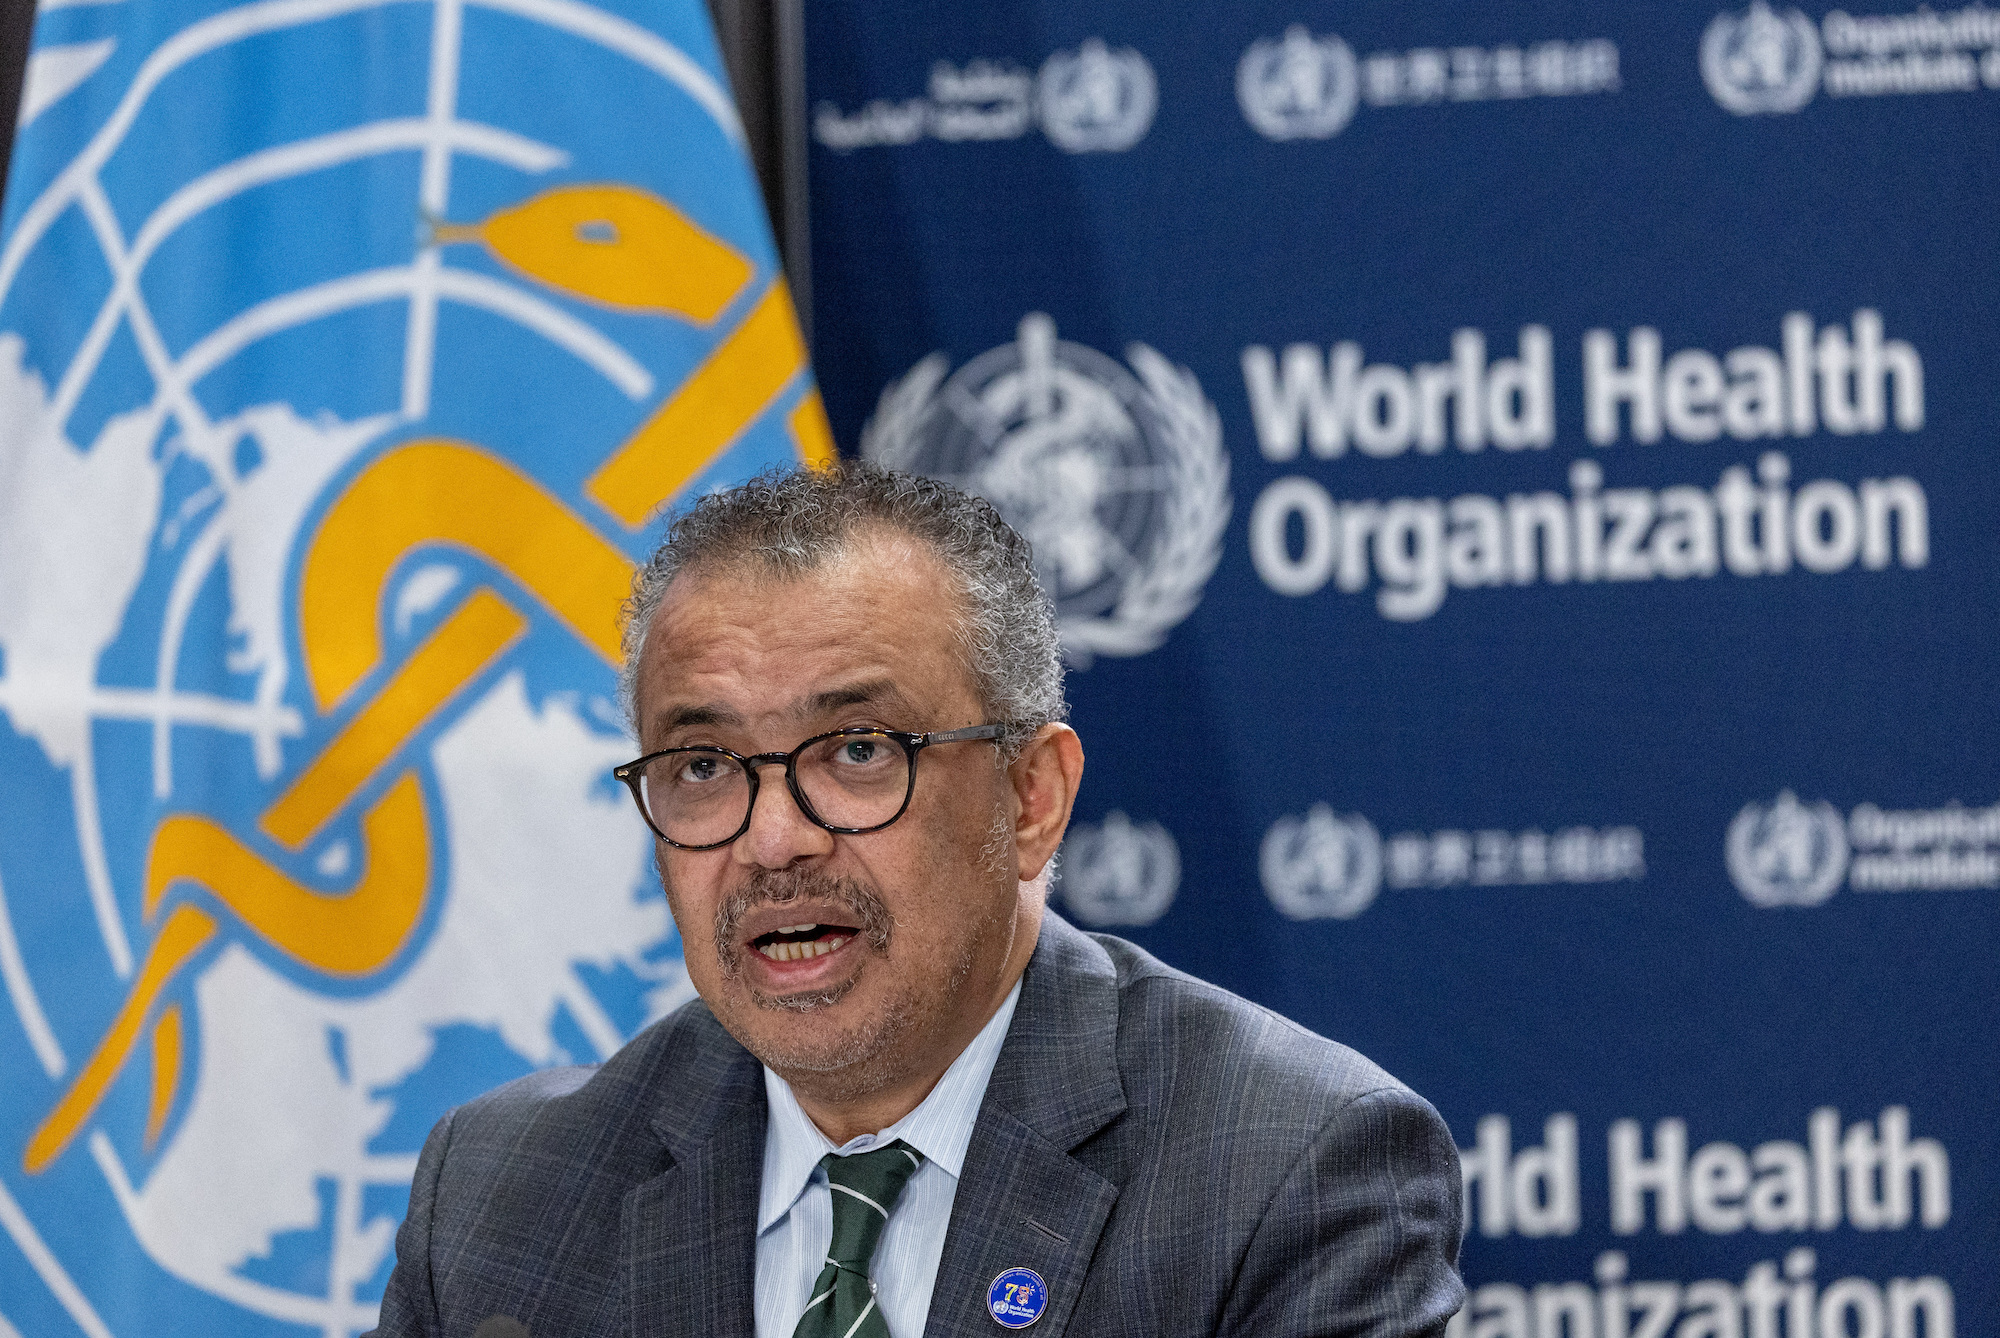 Director-General of the World Health Organization, Dr. Tedros Adhanom Ghebreyesus, is seen at a press briefing in Geneva, Switzerland, on December 15.